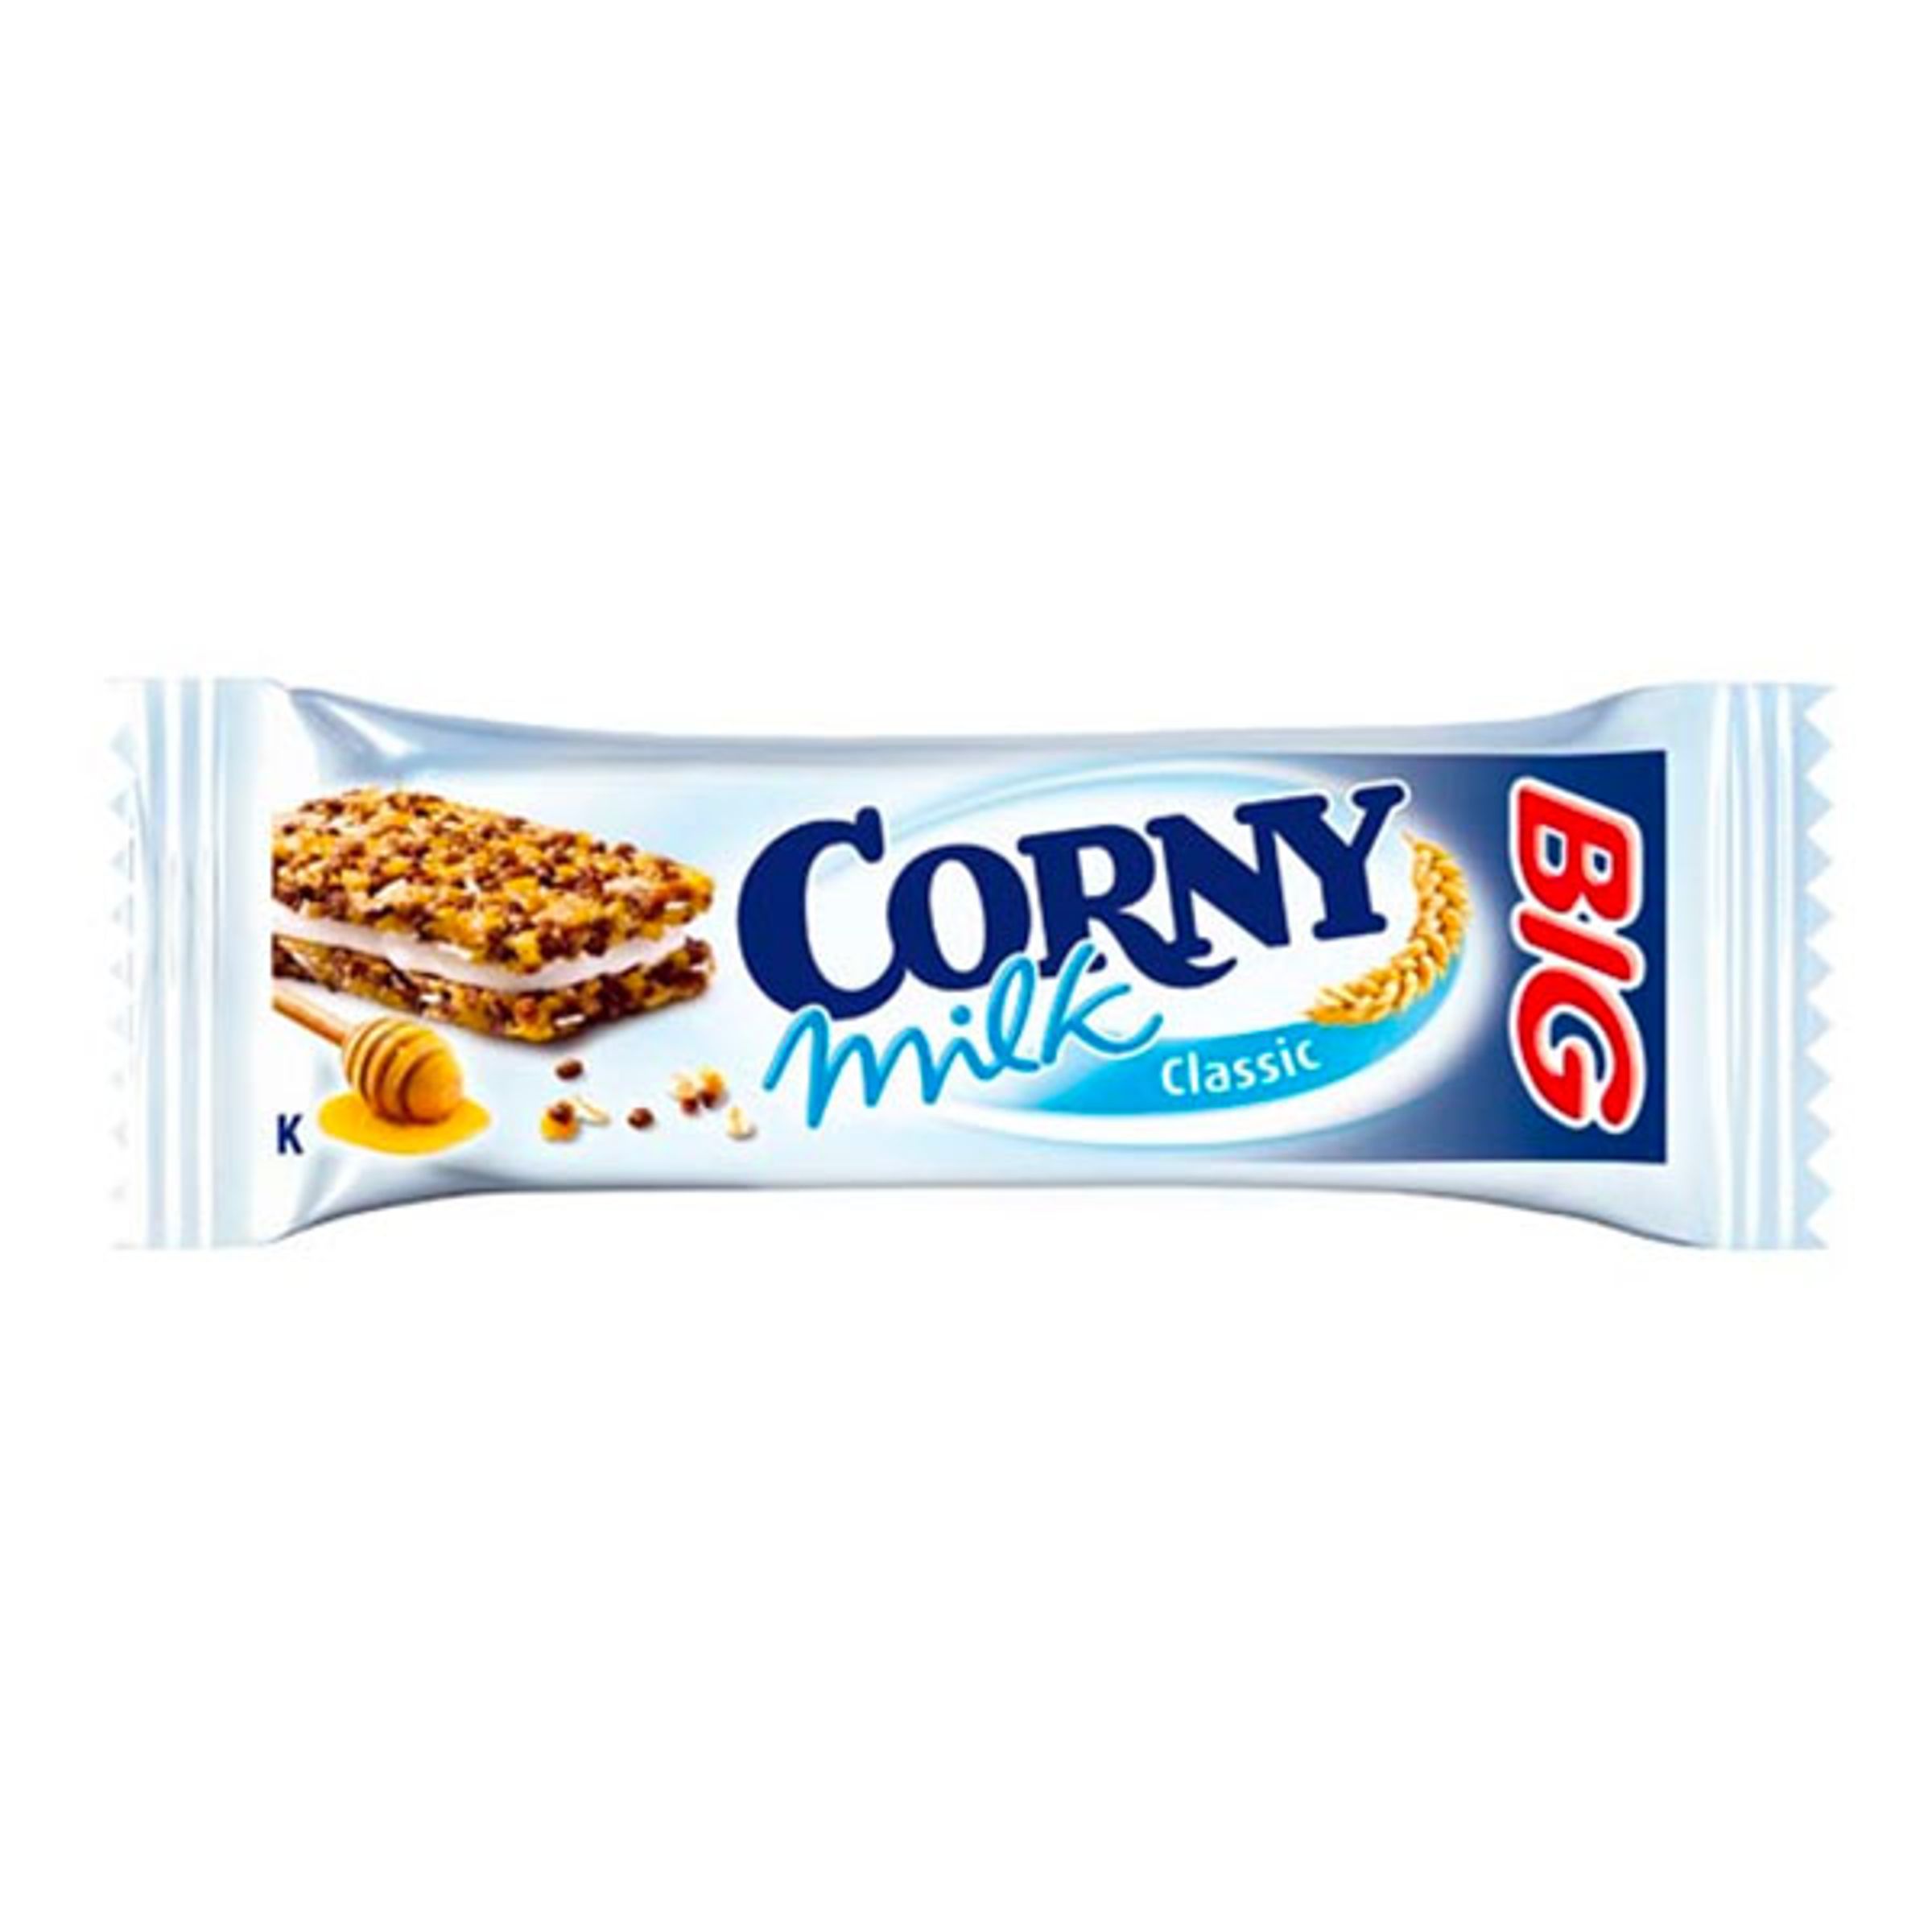 Corny Big Milk Classic - 24-pack